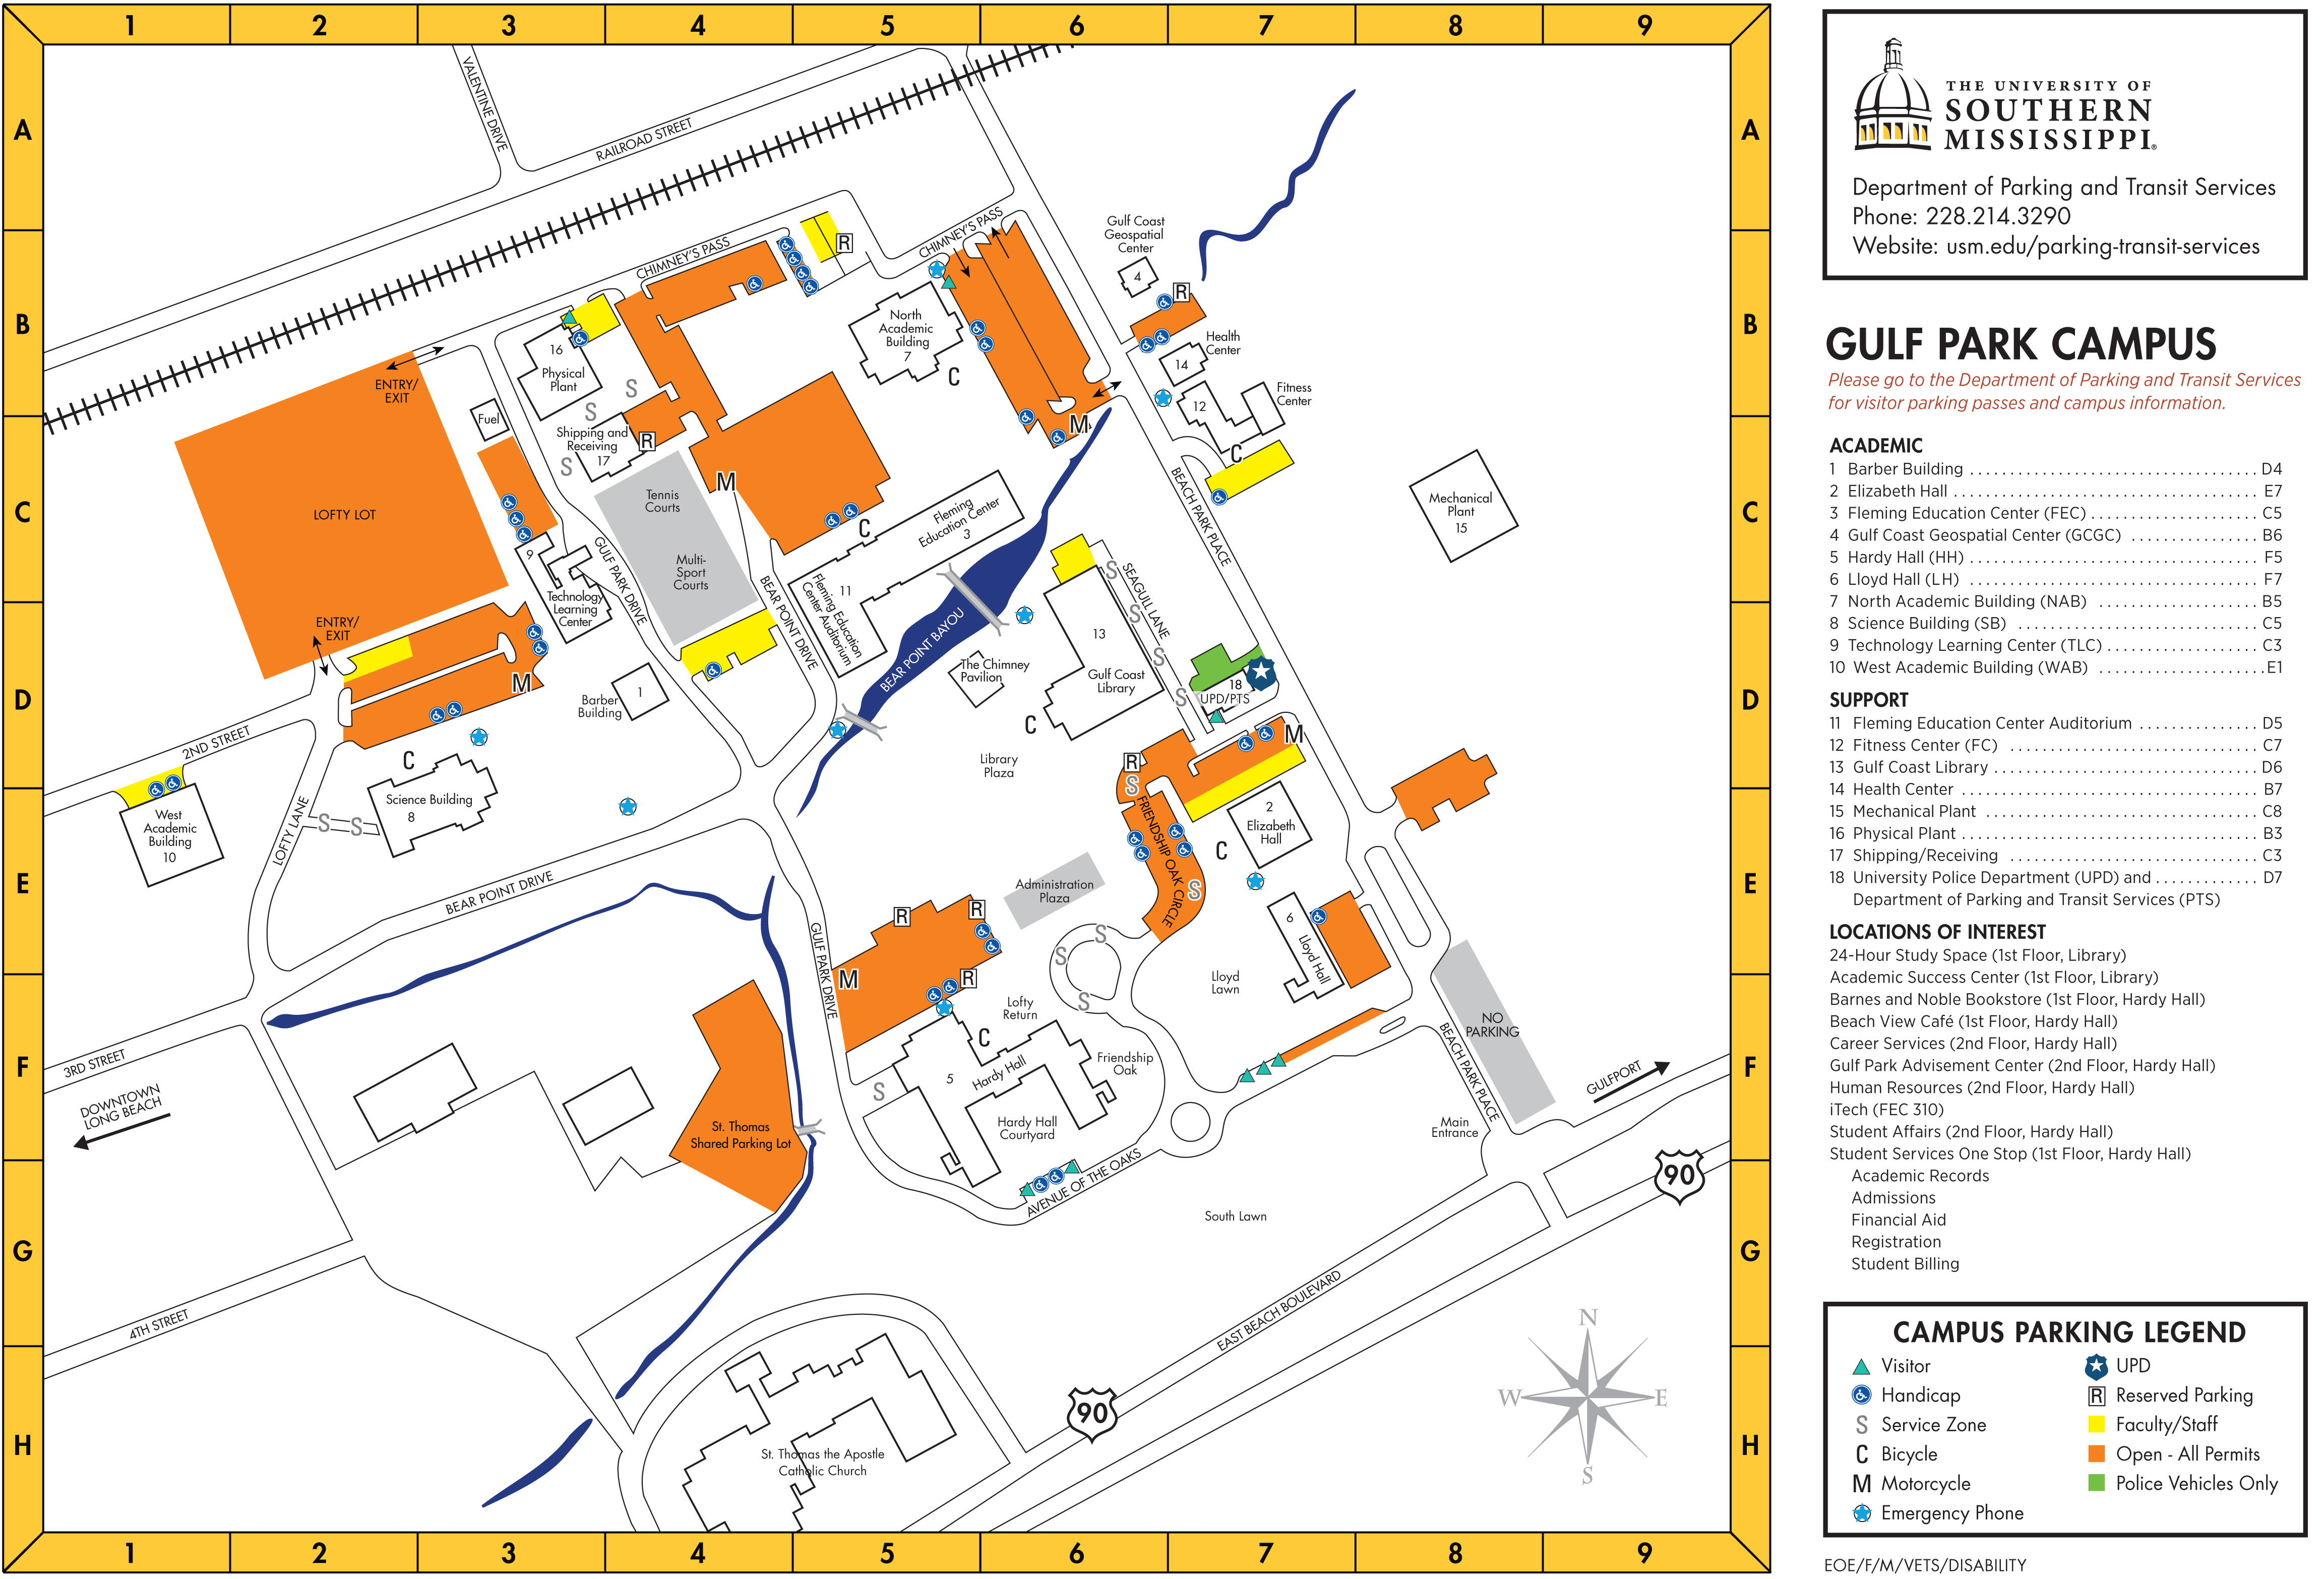 Gulf Park Campus Code Blue Emergency Phones Map